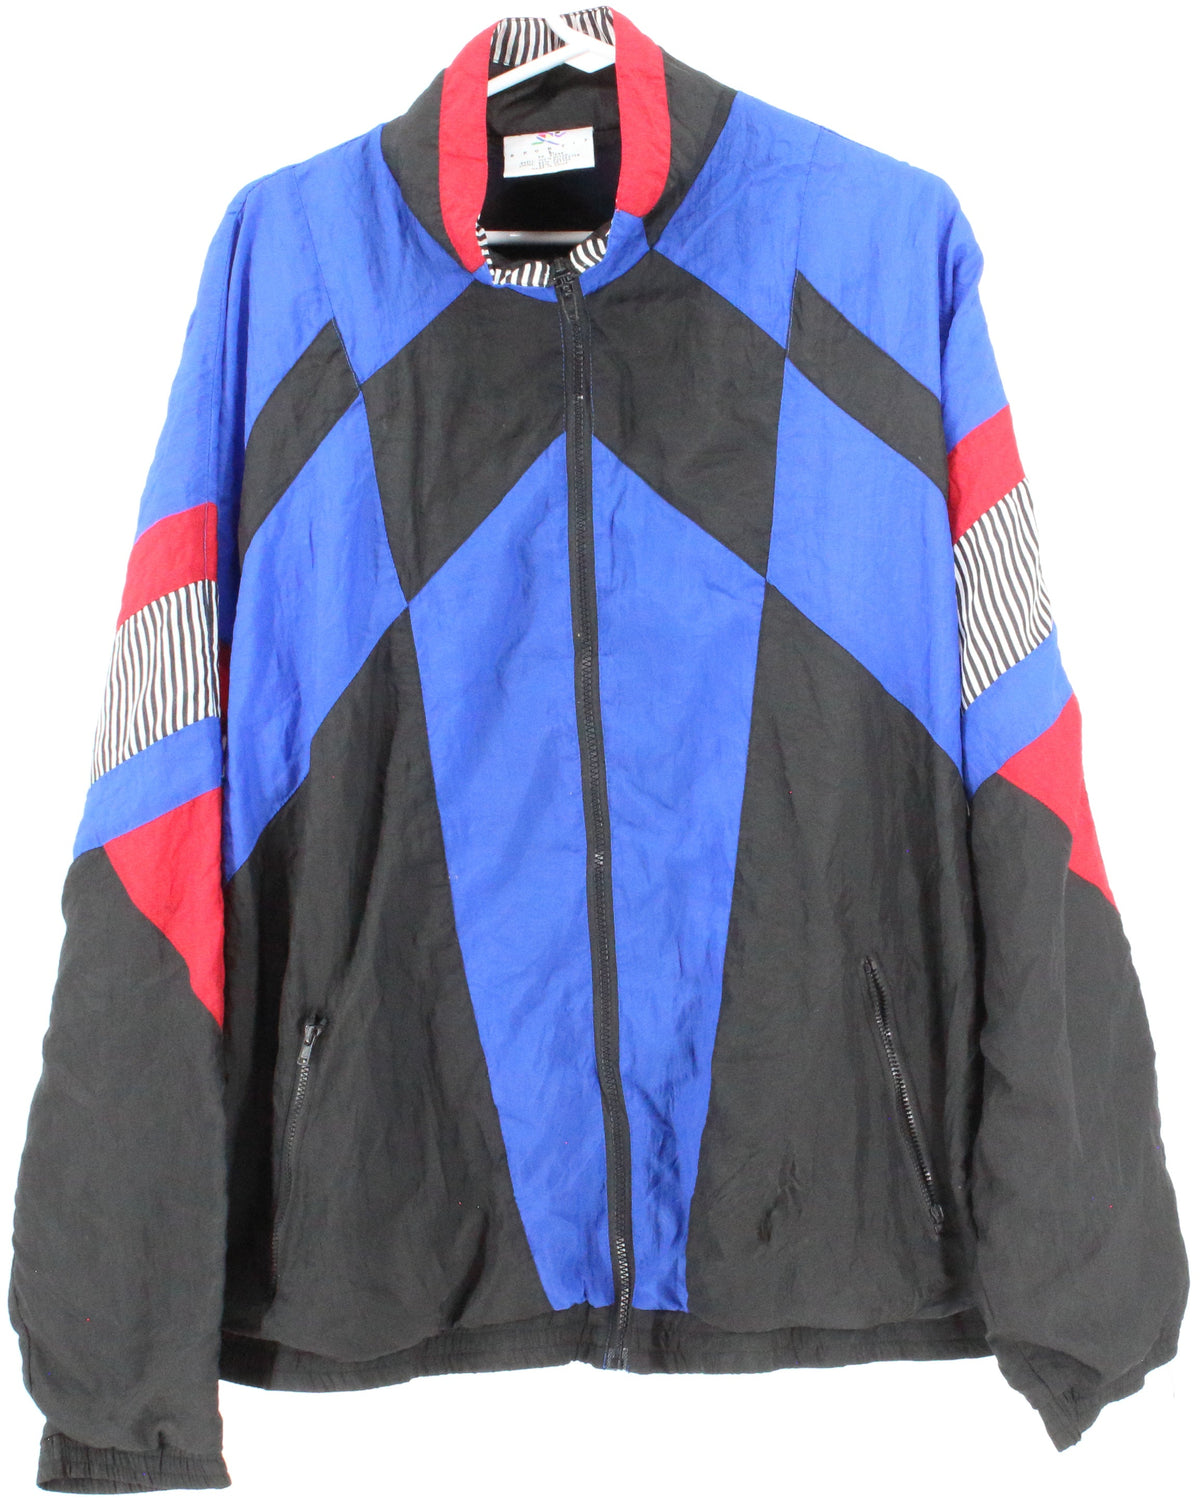 Avait Sportif Blue Black and Red Men's Nylon Jacket